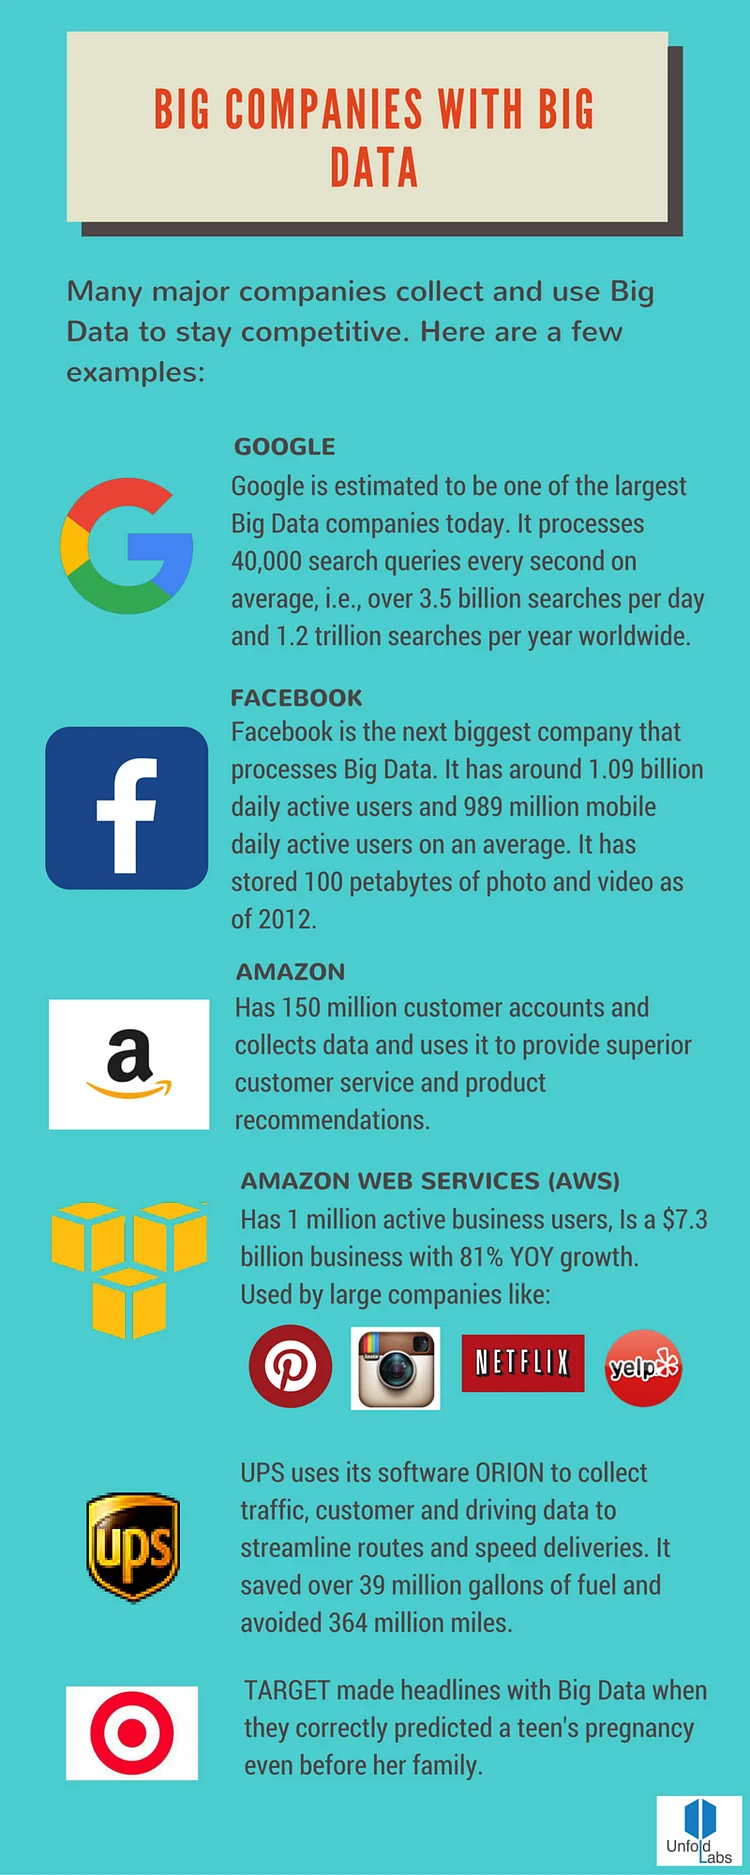 Big companies with Big Data